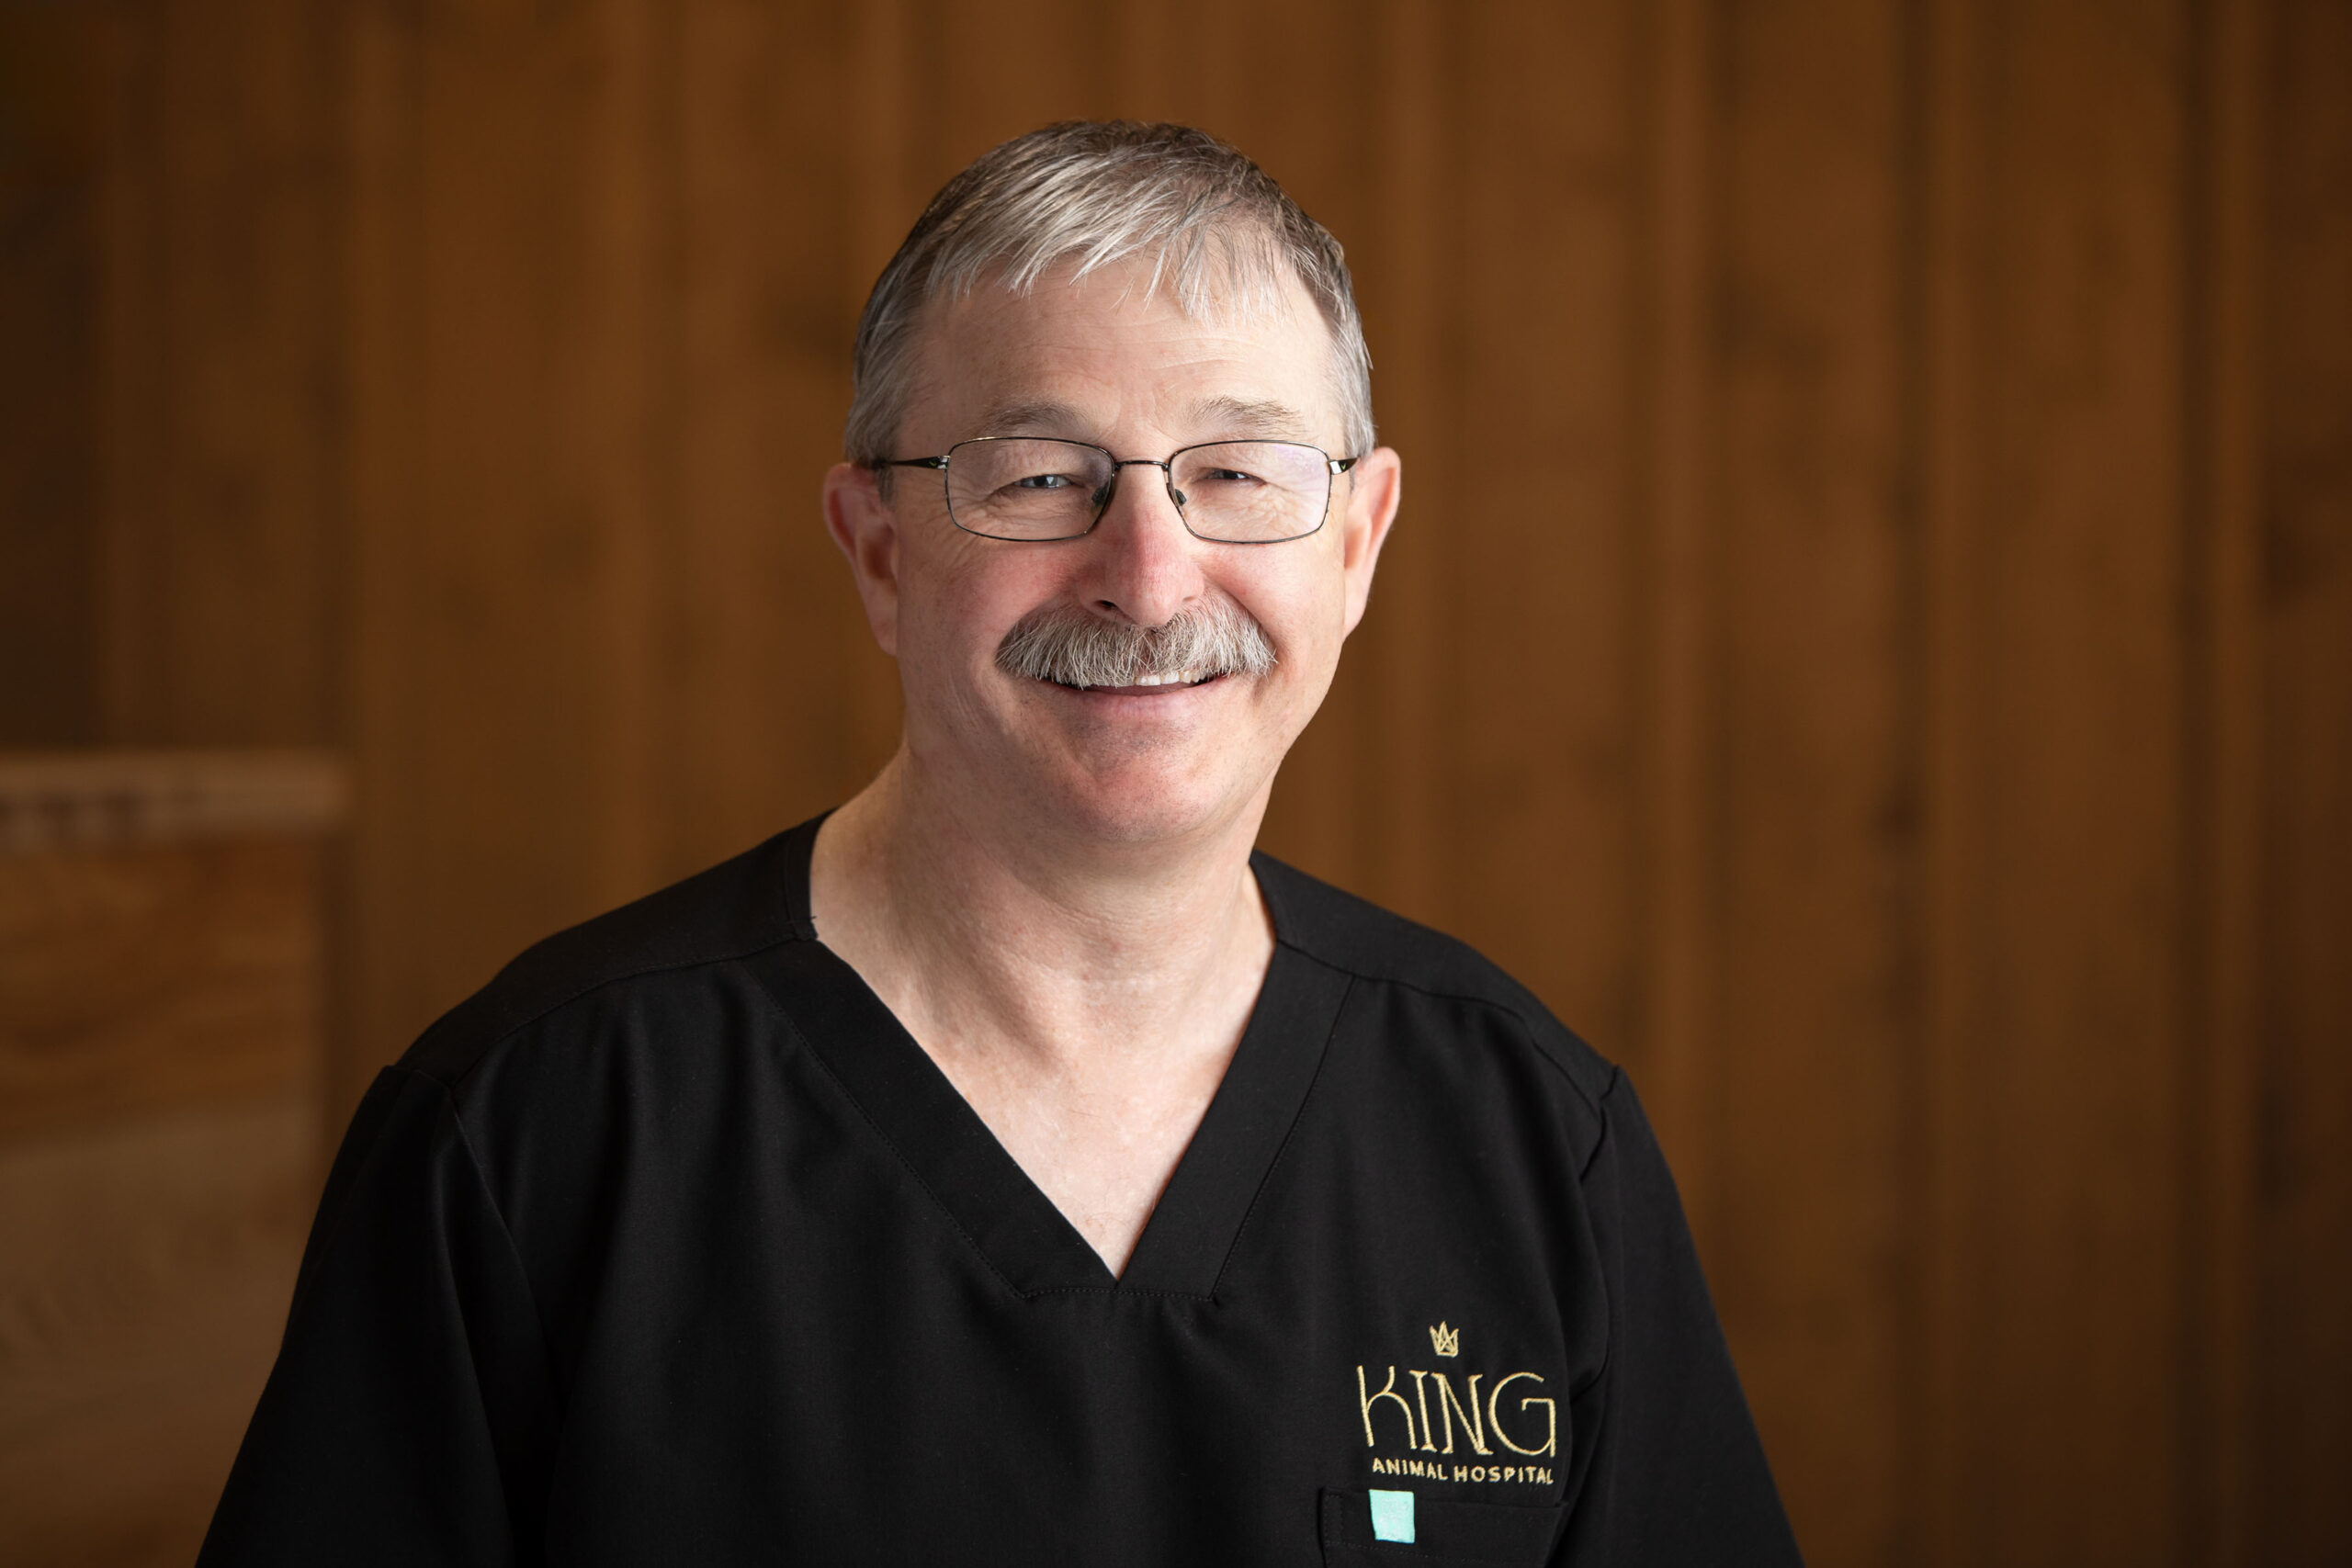 DR. NICK WHELAN JOINS KING ANIMAL HOSPITAL